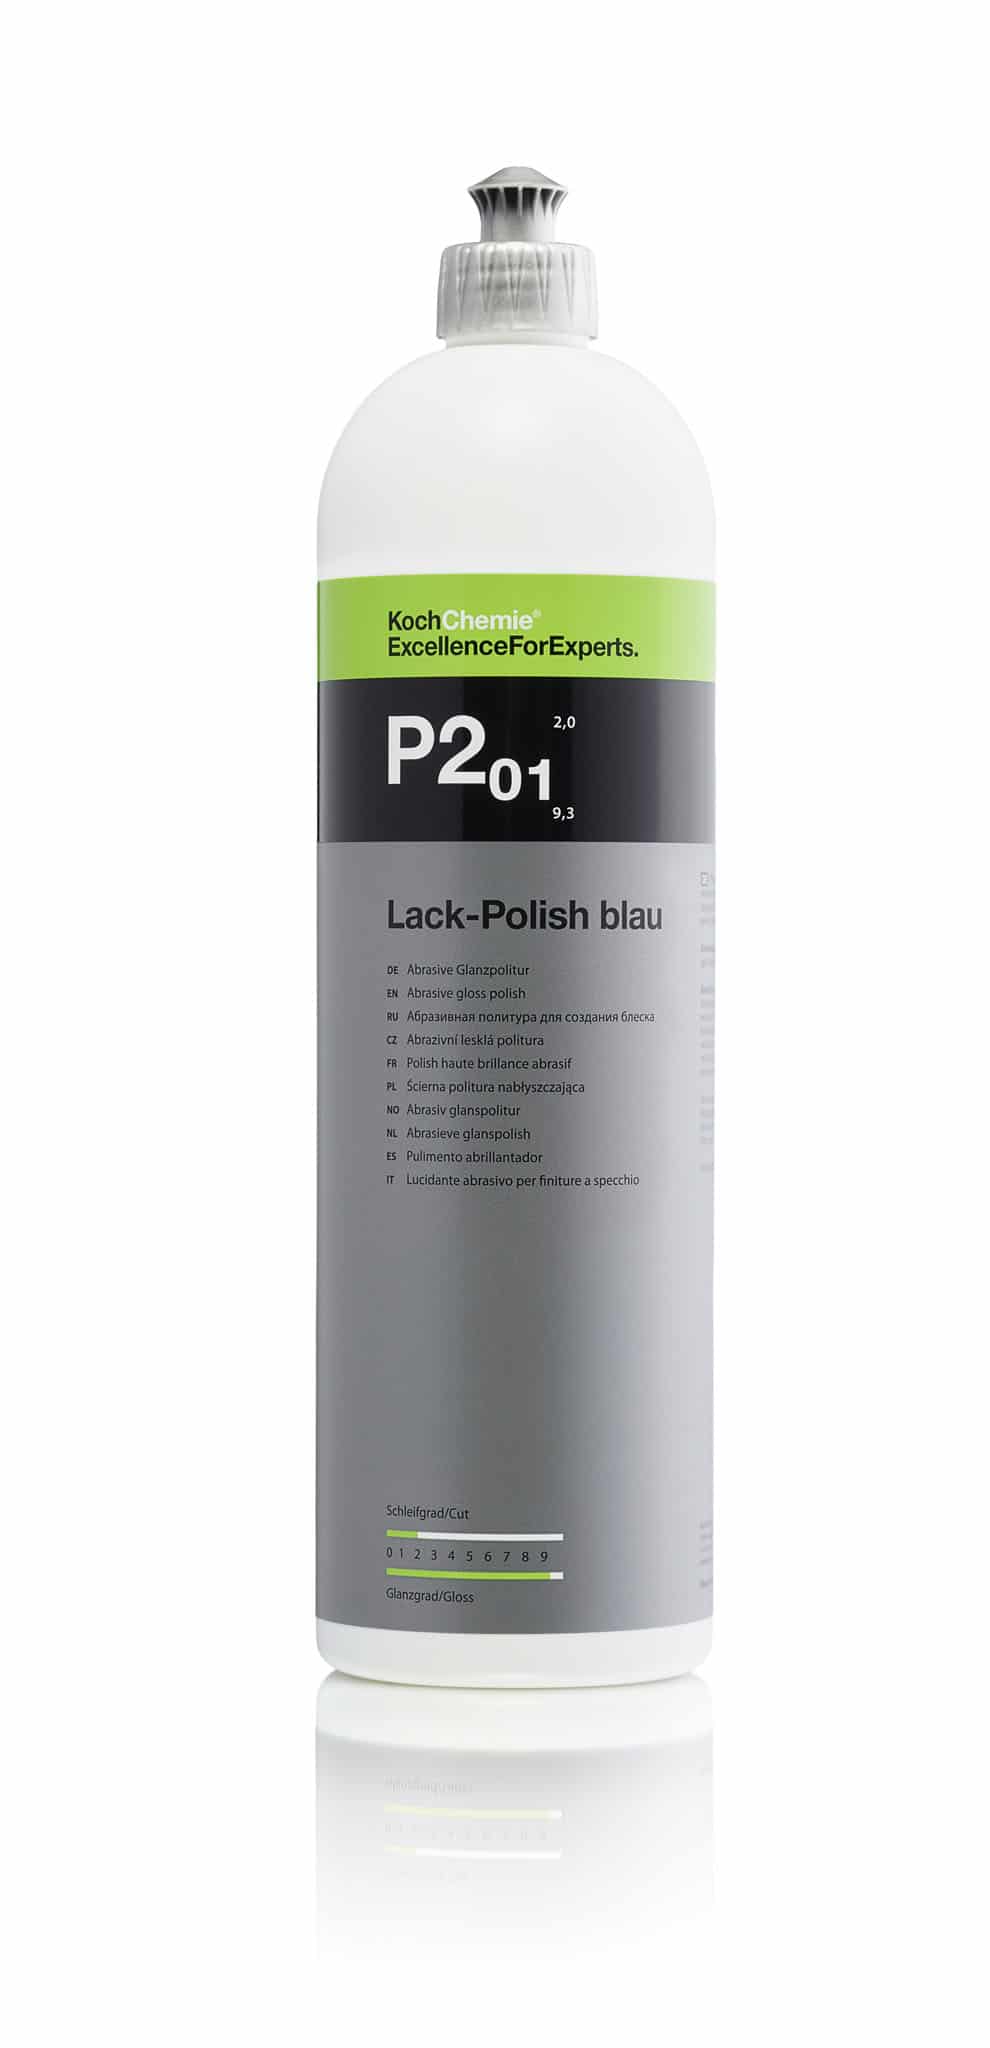 Koch-Chemie lack-polish grün